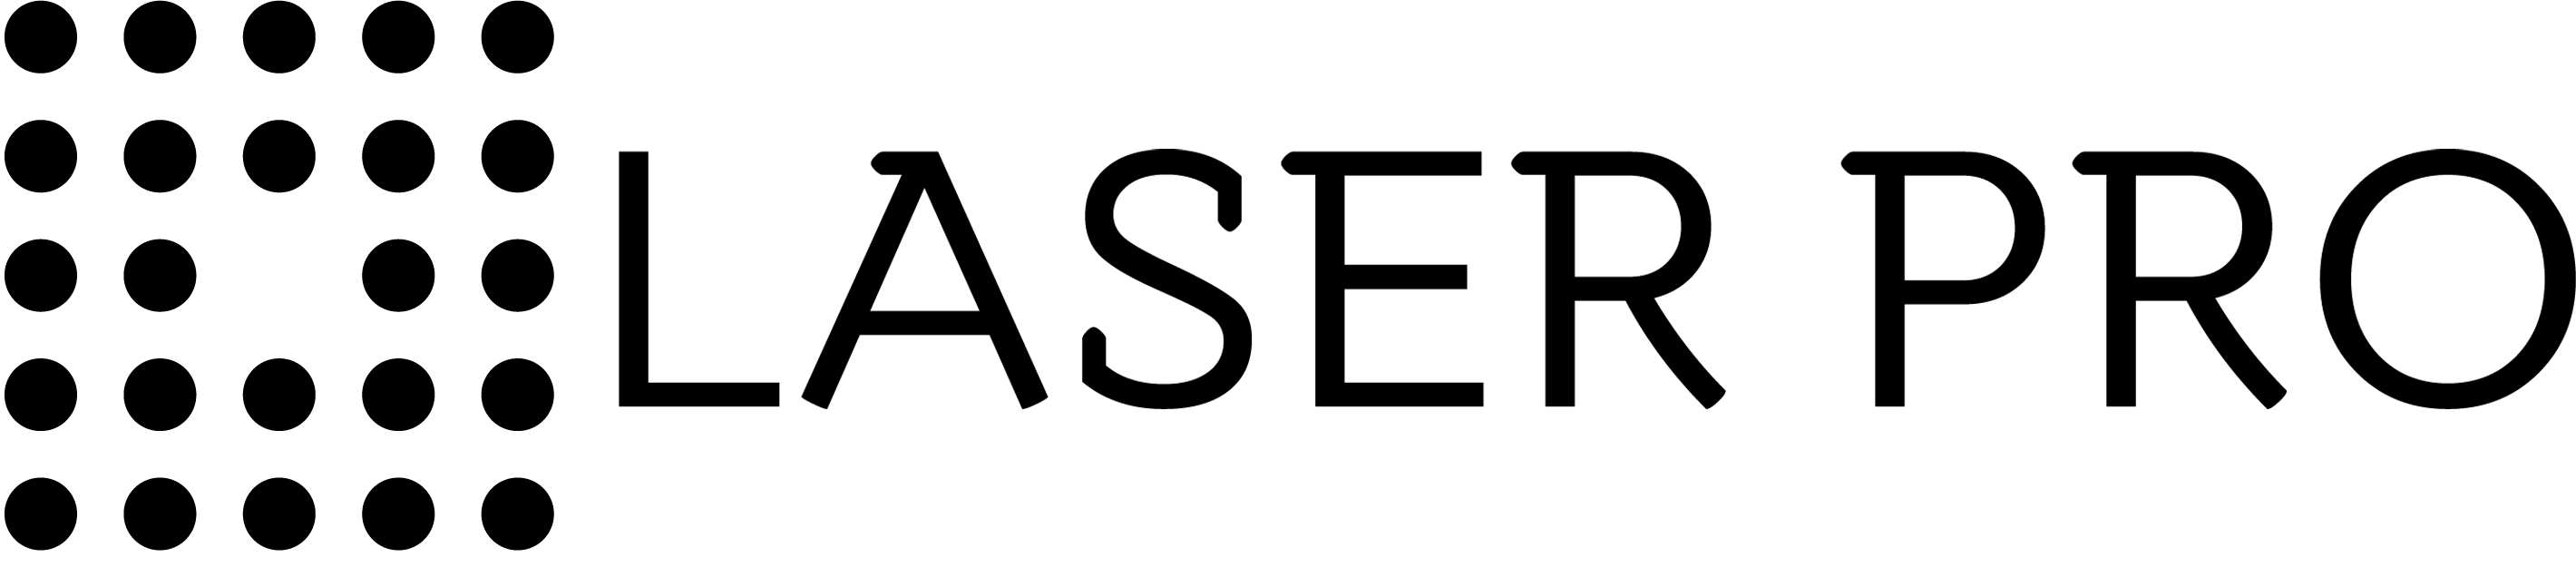 laserp logo